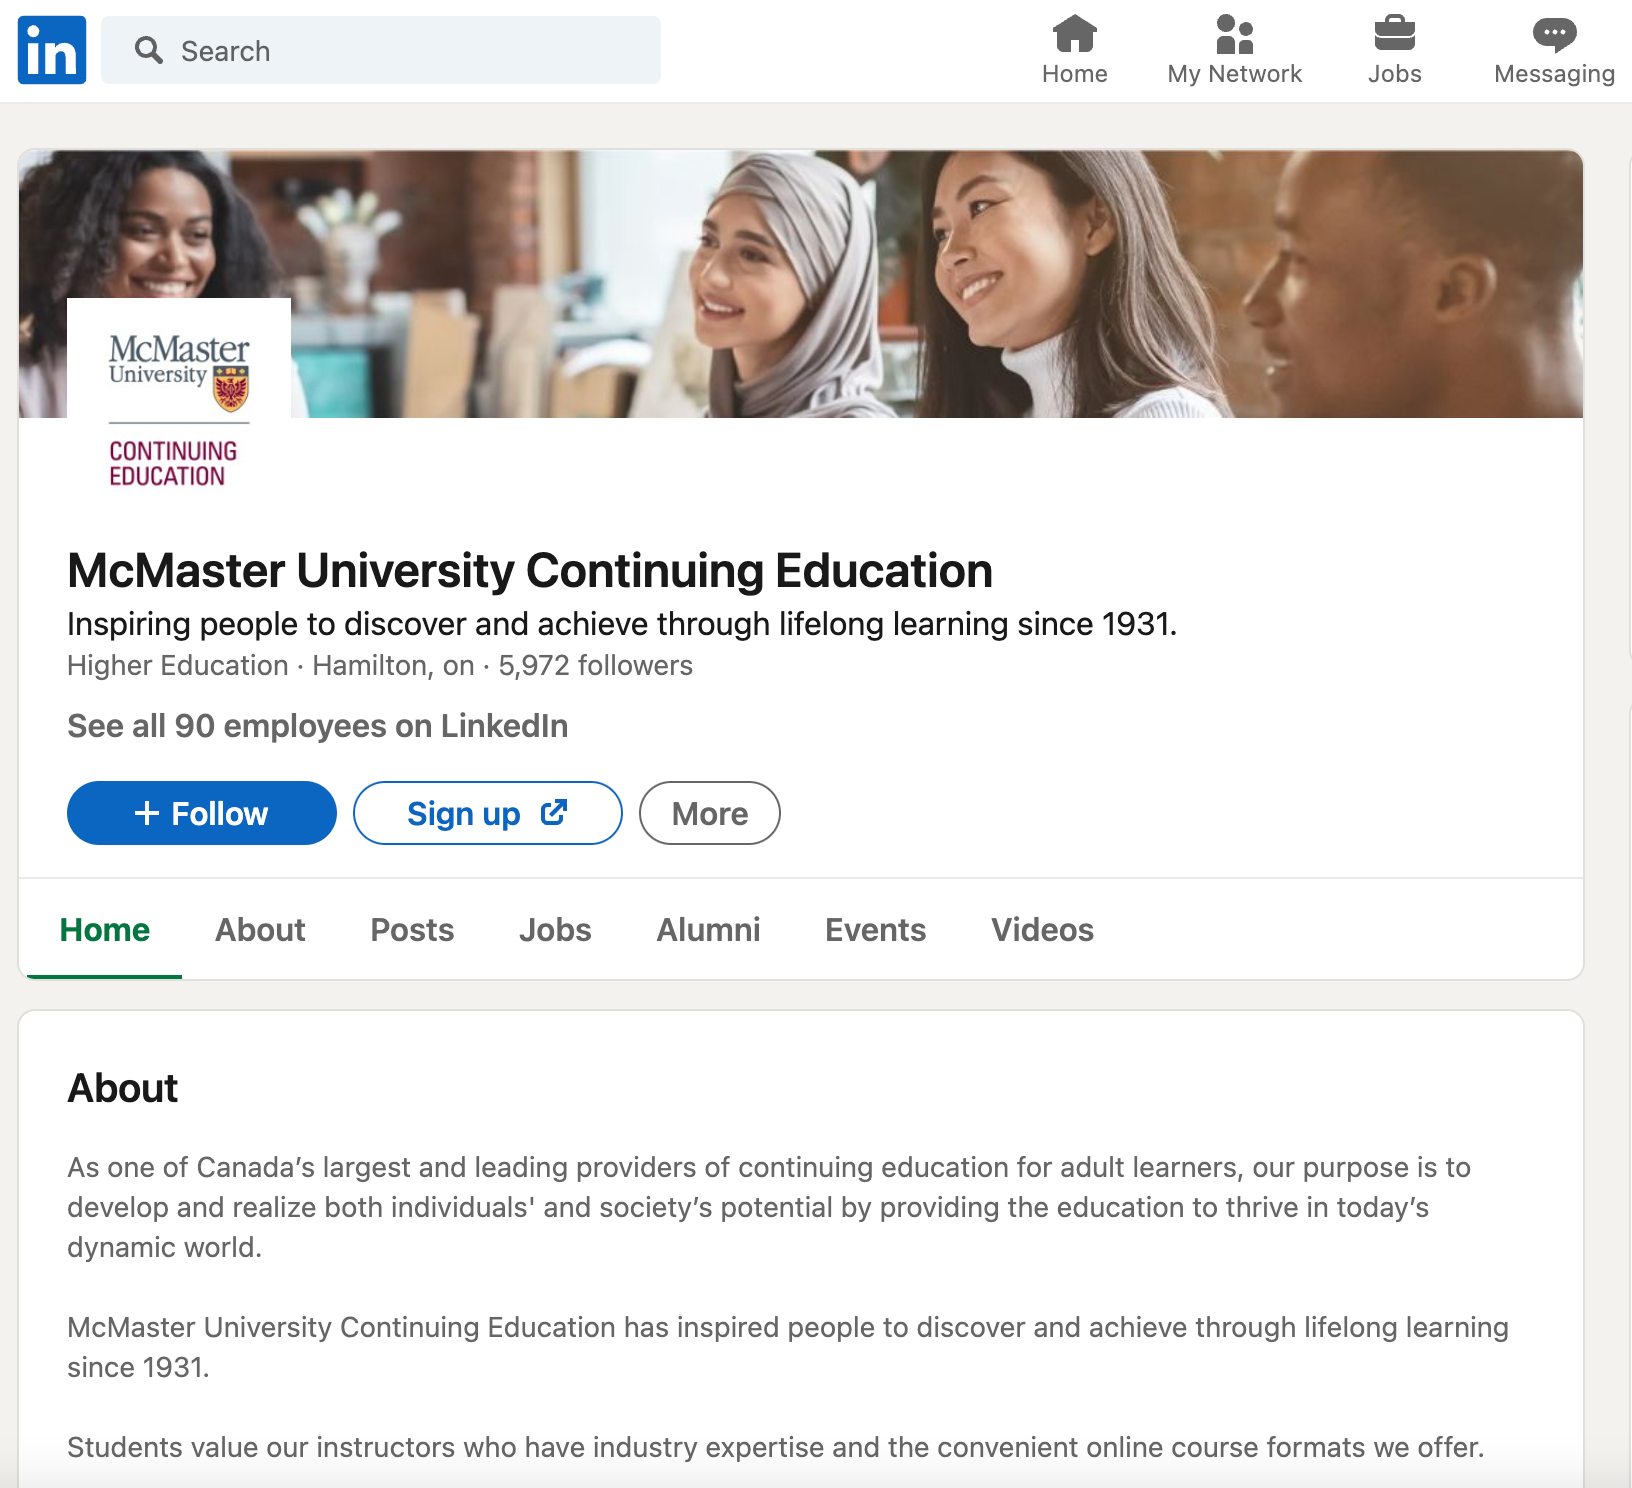 McMasters University LinkedIn marketing for continuing education